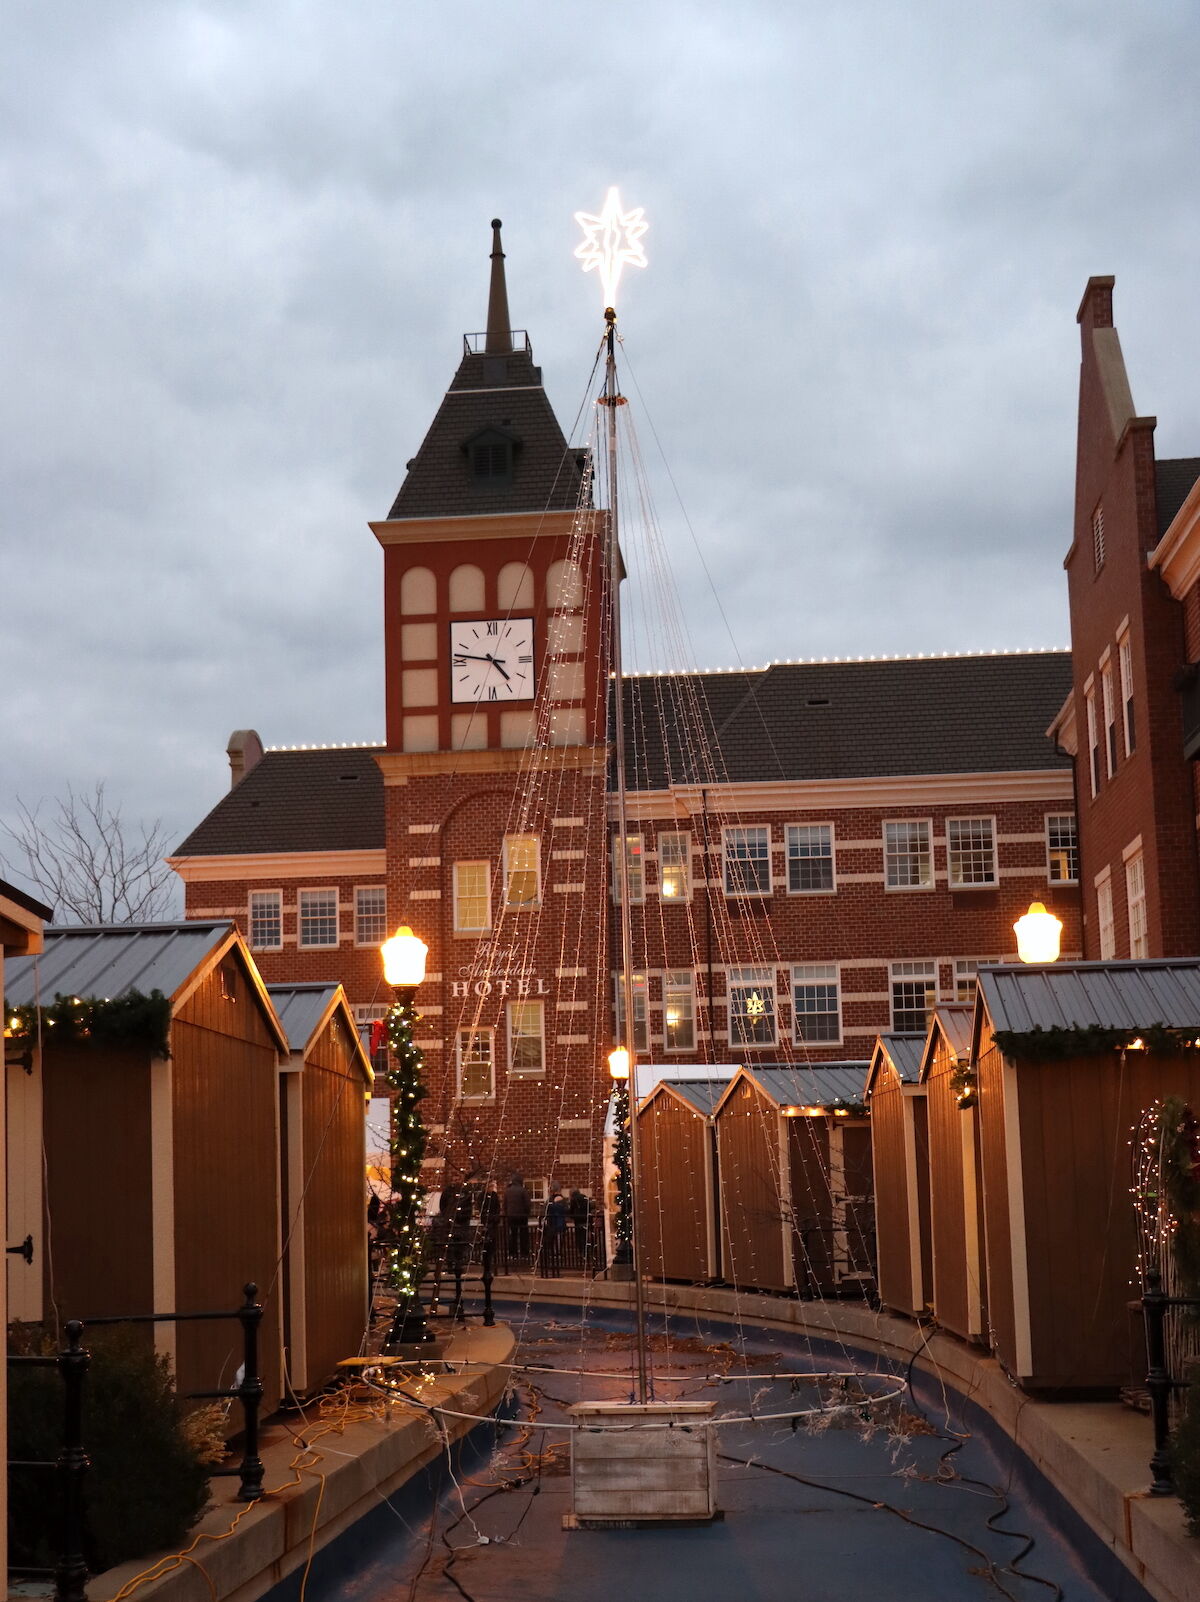 Stalls and holiday lights at Kerstmarkt, Pella's Dutch Christmas market in Pella, Iowa